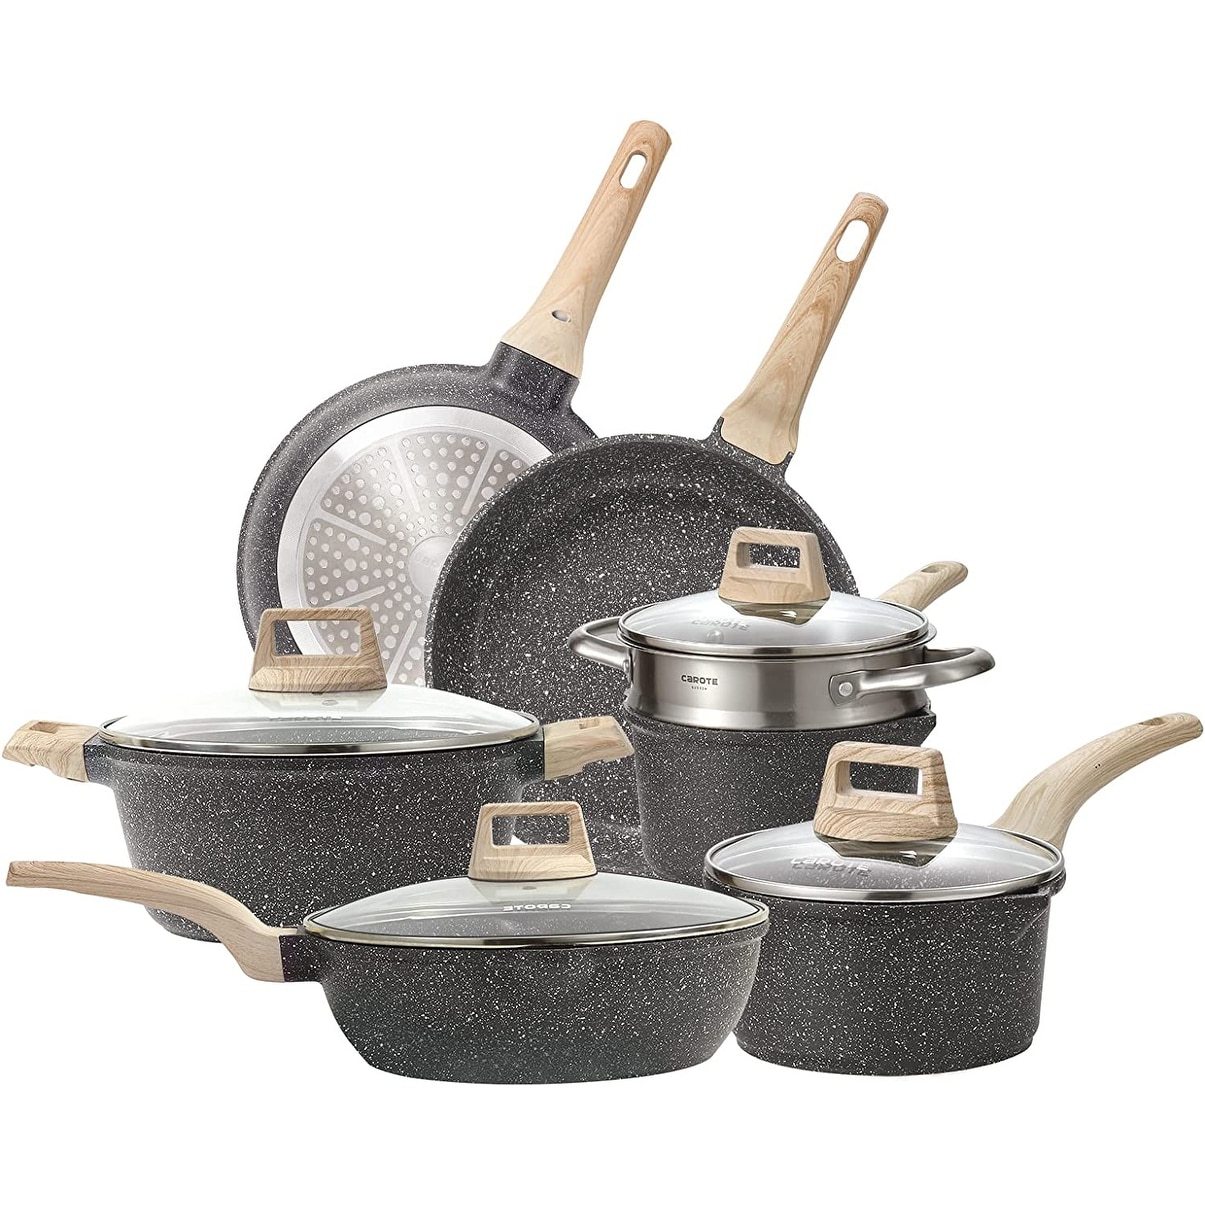 https://ak1.ostkcdn.com/images/products/is/images/direct/b47b7632f3f46036ec067dcd8da5d994e303699d/Kitchen-Cookware-Sets%2C-11-Pcs-Nonstick-Pot-and-Pan-Set%2C-Granite-Cookware%2C-Non-Stick-Frying-Pans-Set.jpg